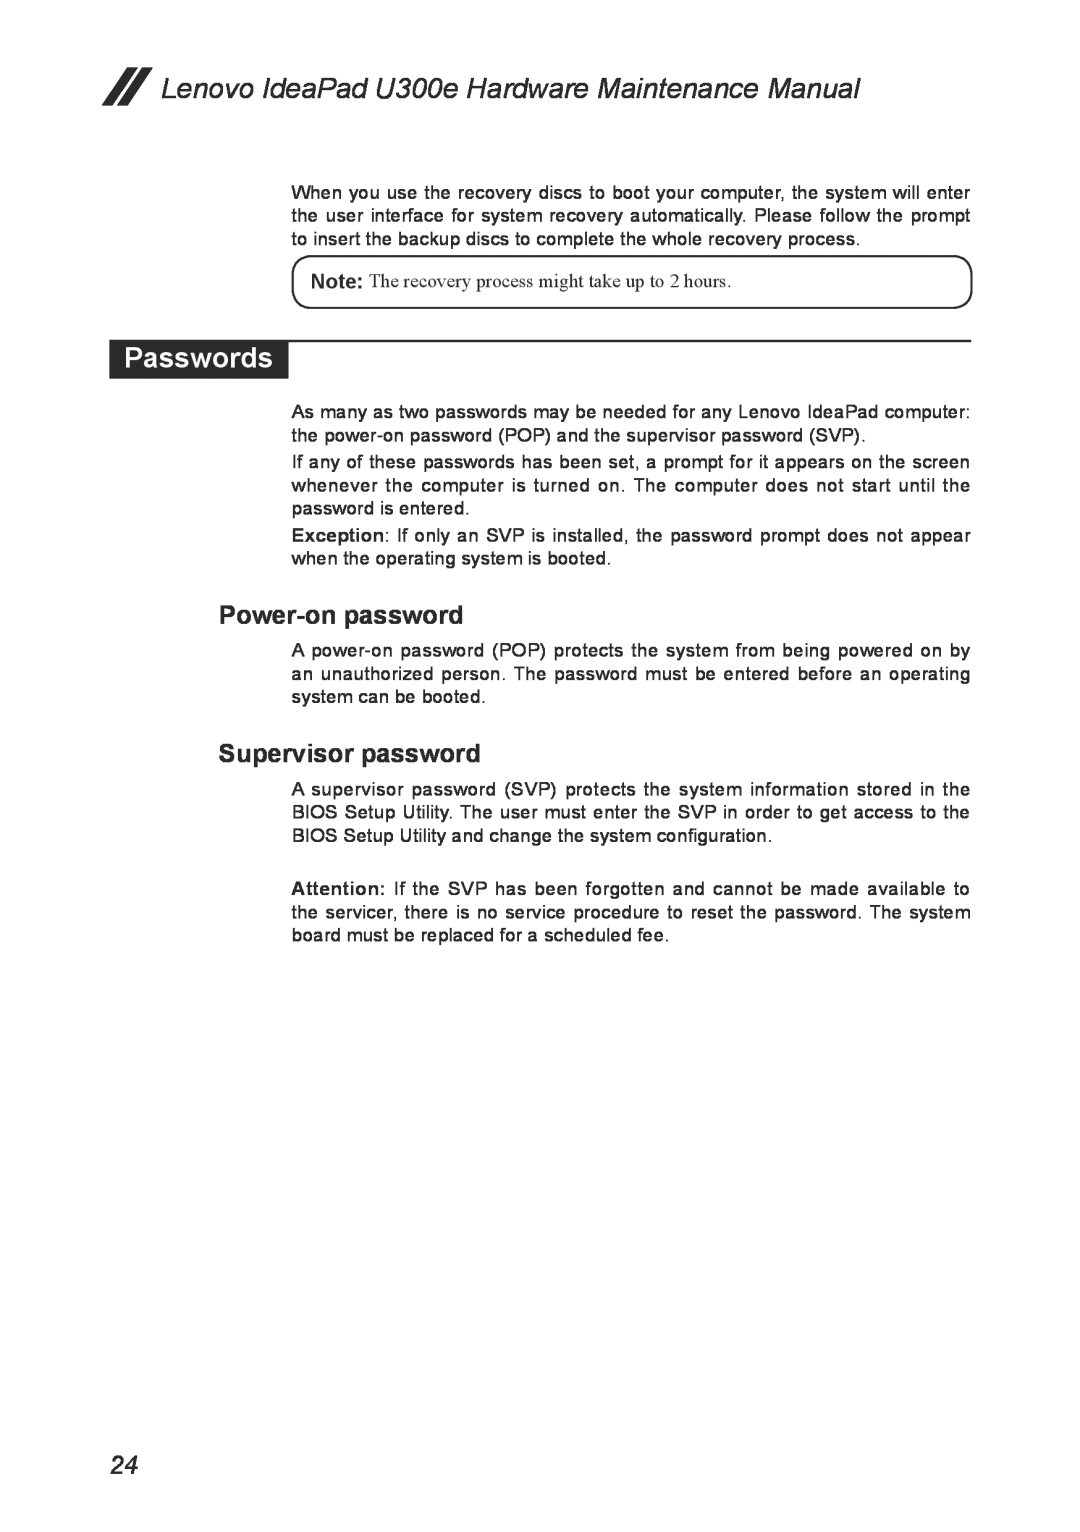 Lenovo U300E manual Passwords, Power-on password, Supervisor password, Lenovo IdeaPad U300e Hardware Maintenance Manual 